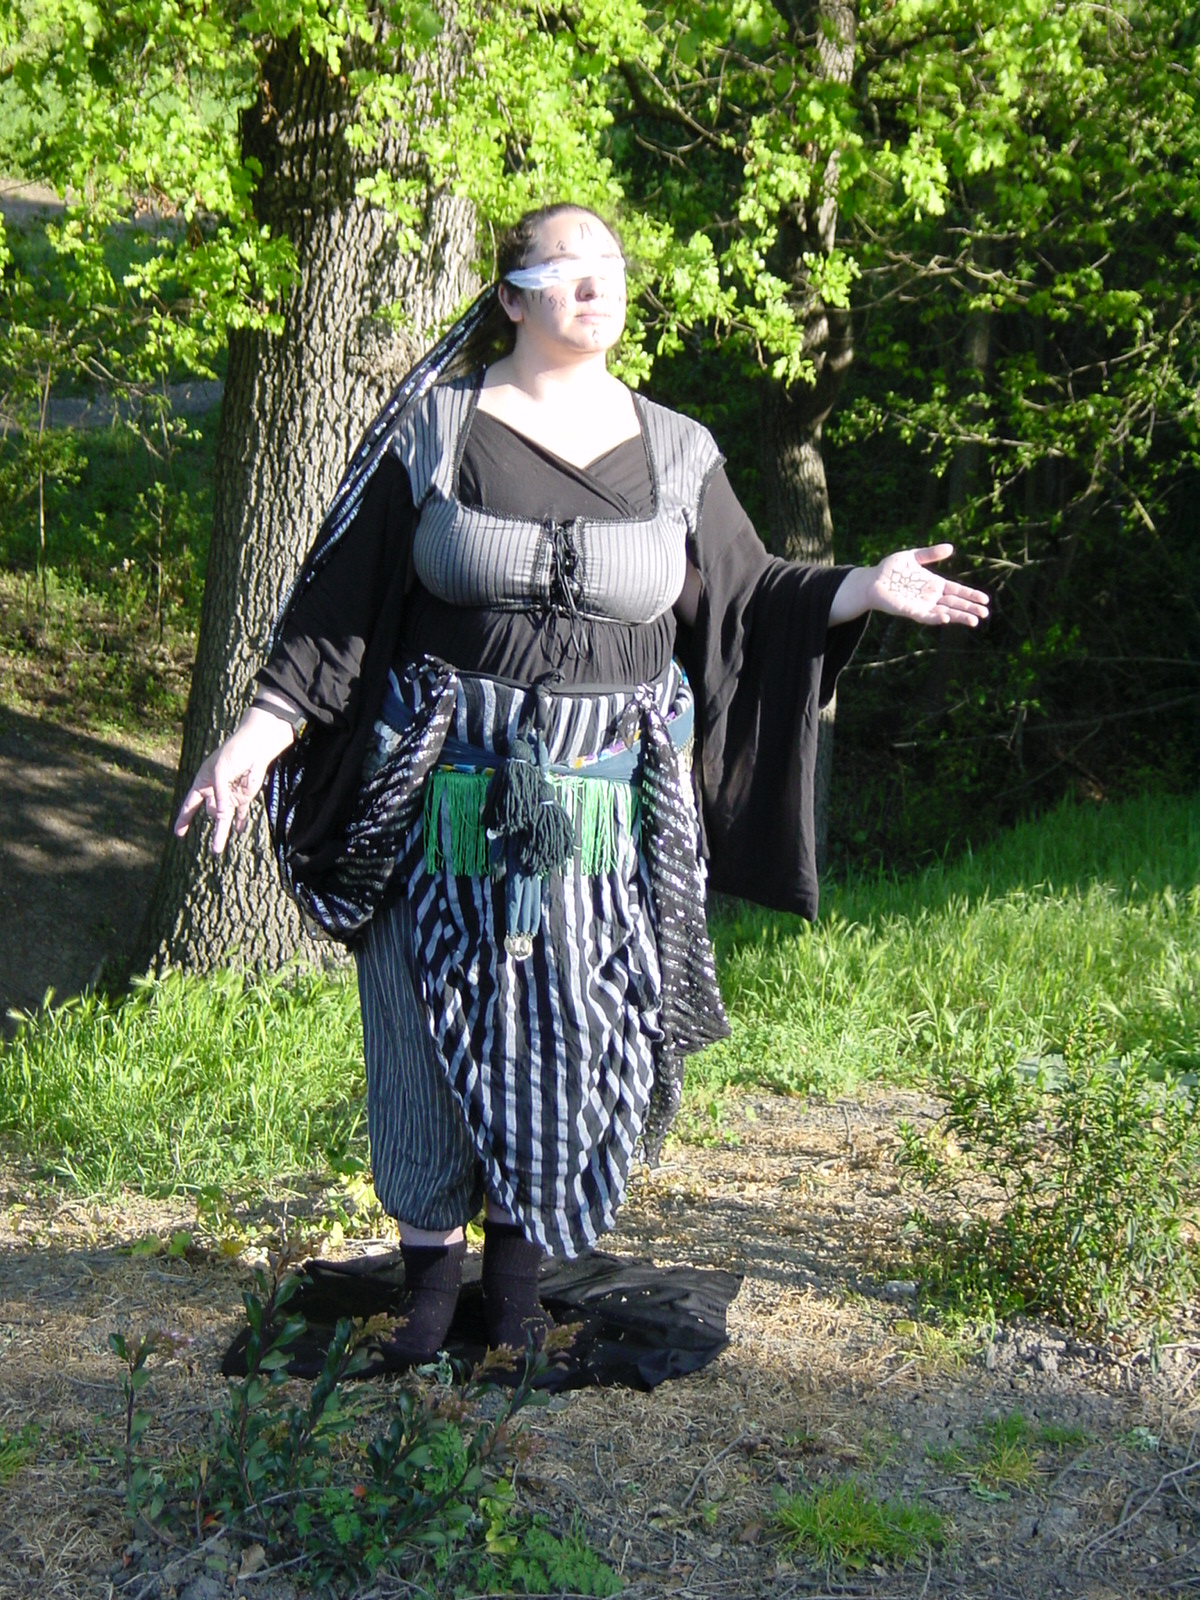 Lysette Tourneur, Gypsy Harbinger of the Full Moon Clan (NPC, Megan)